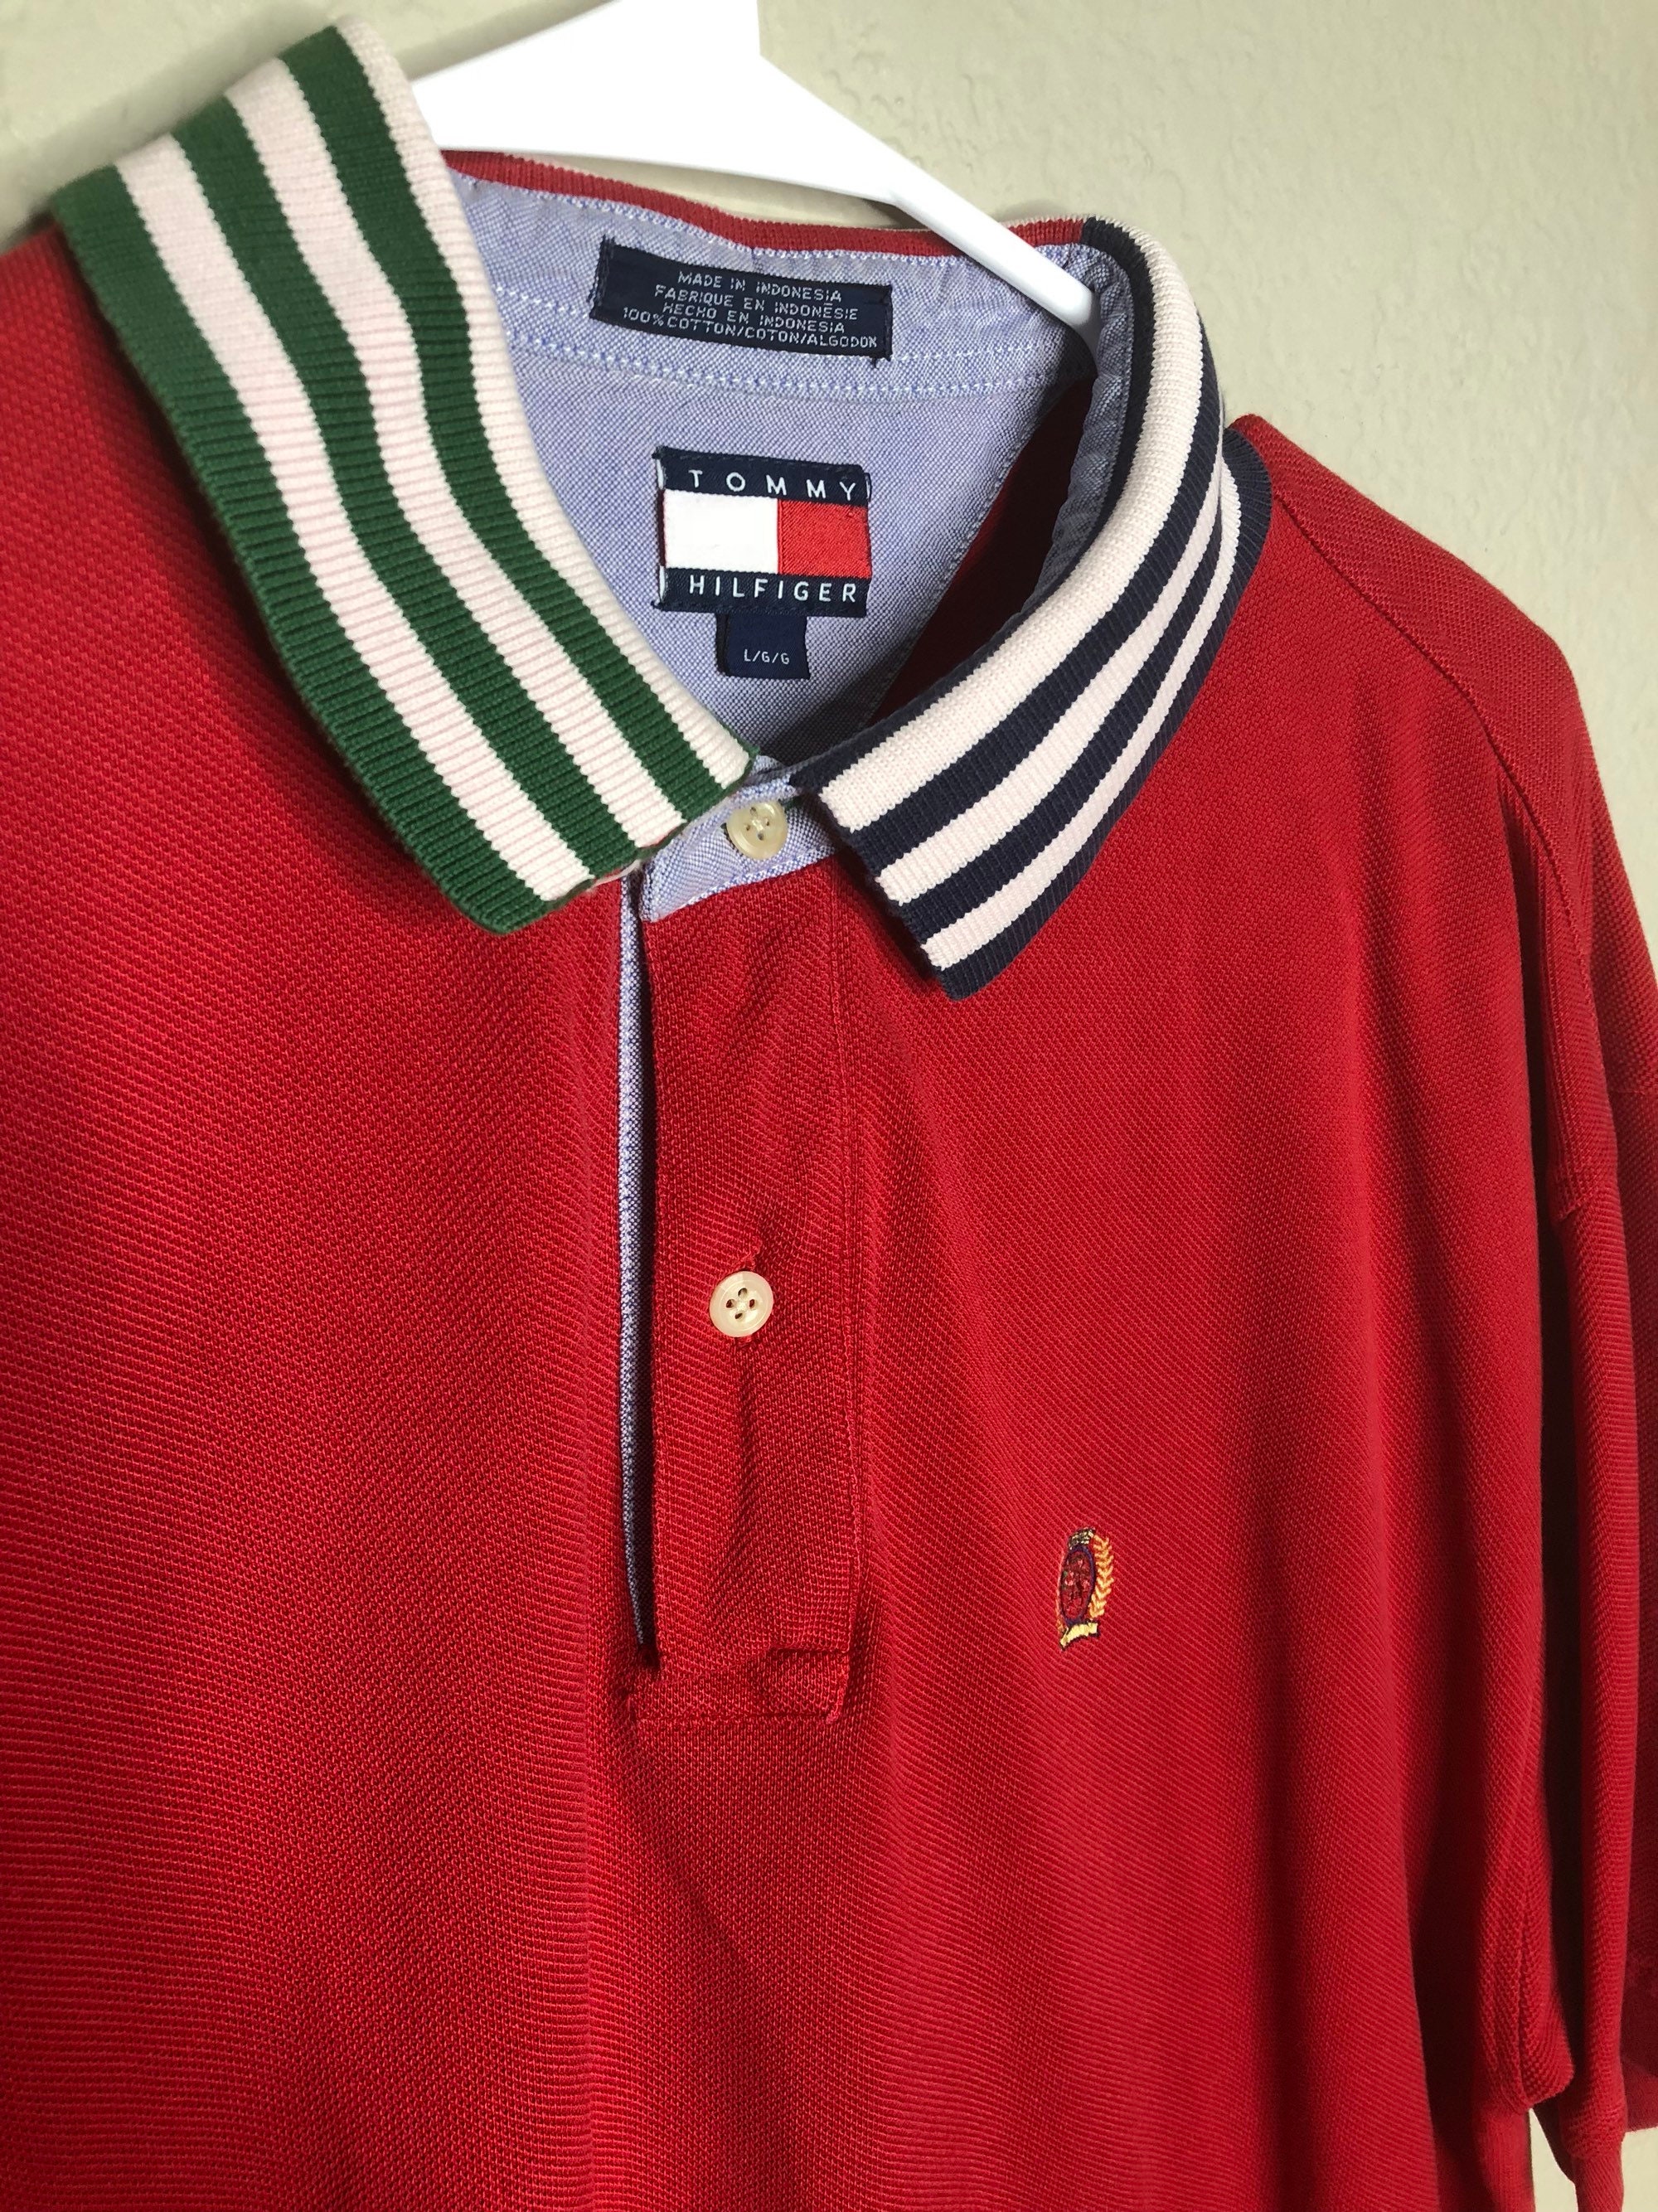 Vintage Tommy Hilfiger Tri colored striped collar color block | Etsy